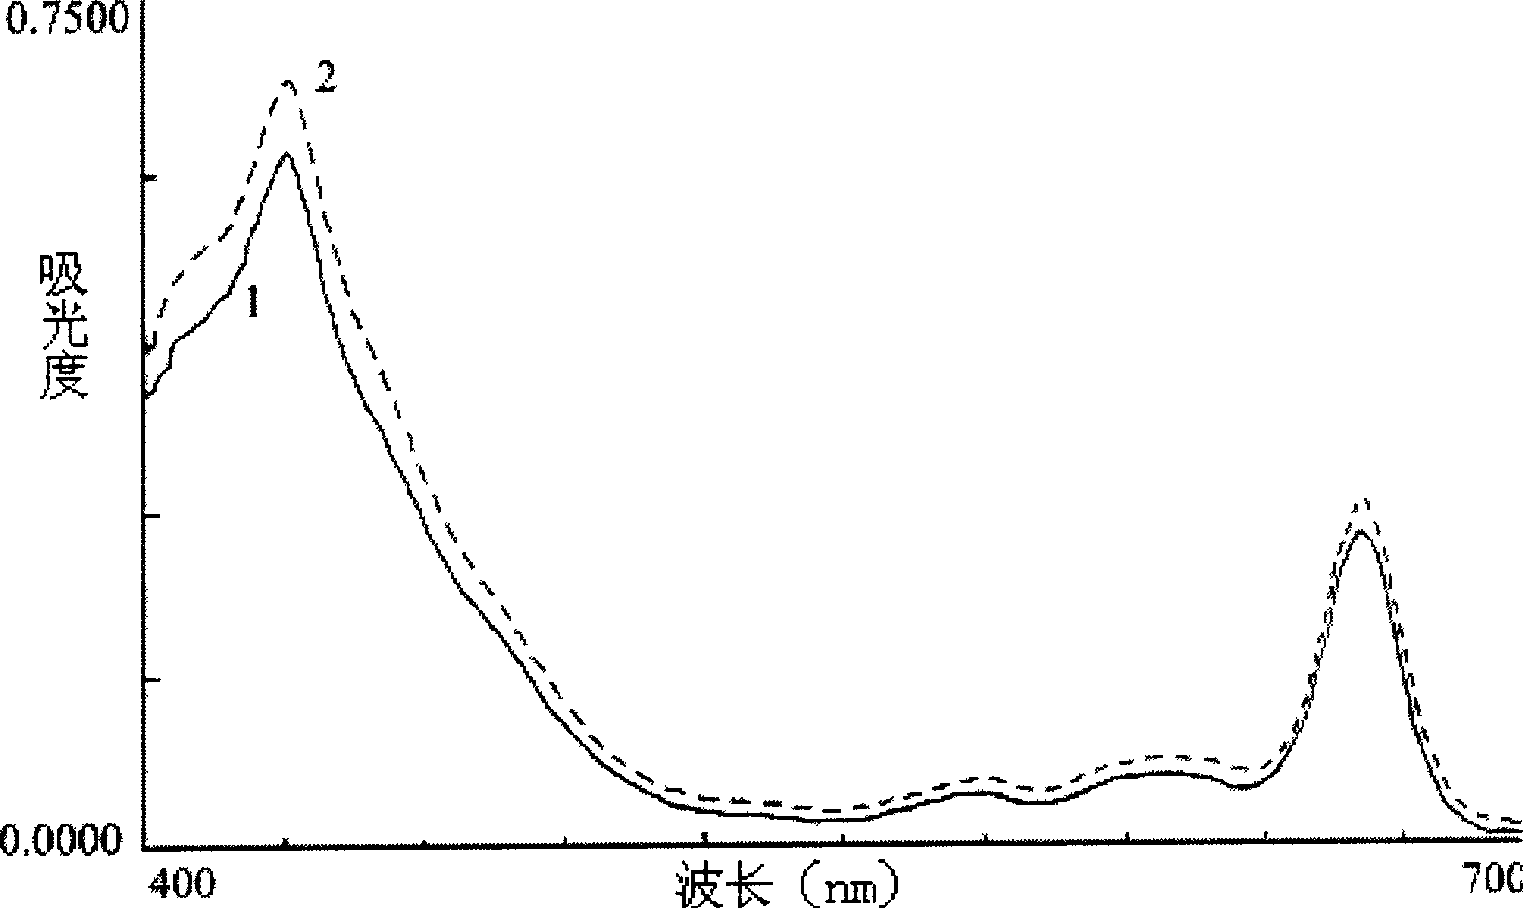 Process of separating fucoxanthin from algae